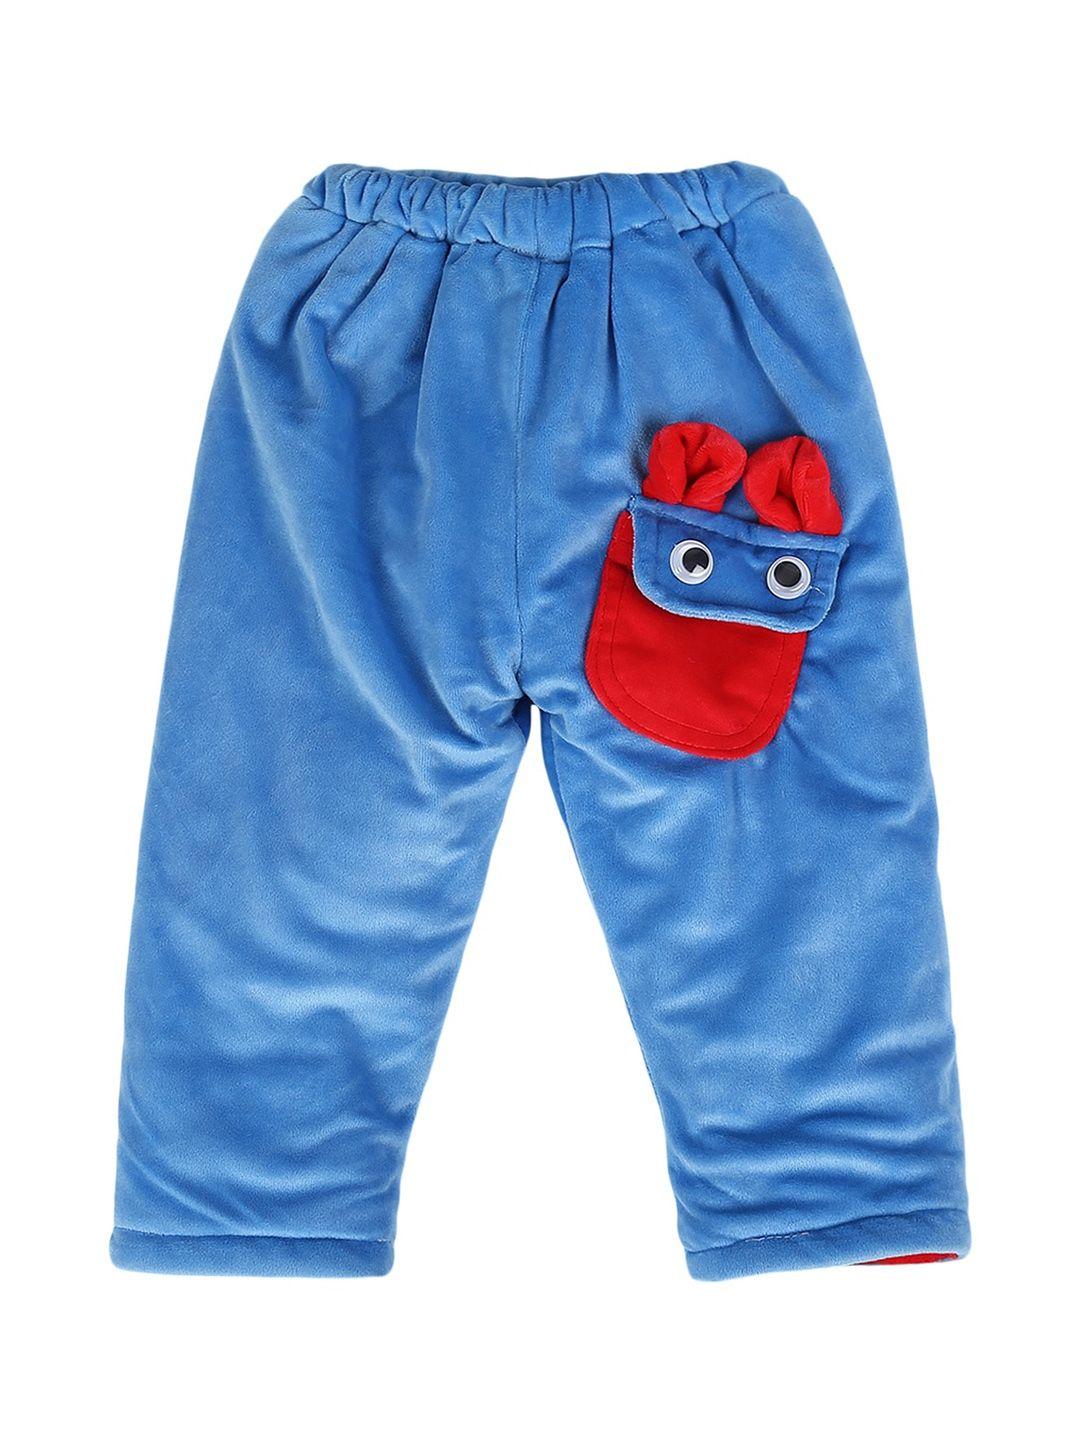 v-mart-infant-mid-rise-cotton-trousers